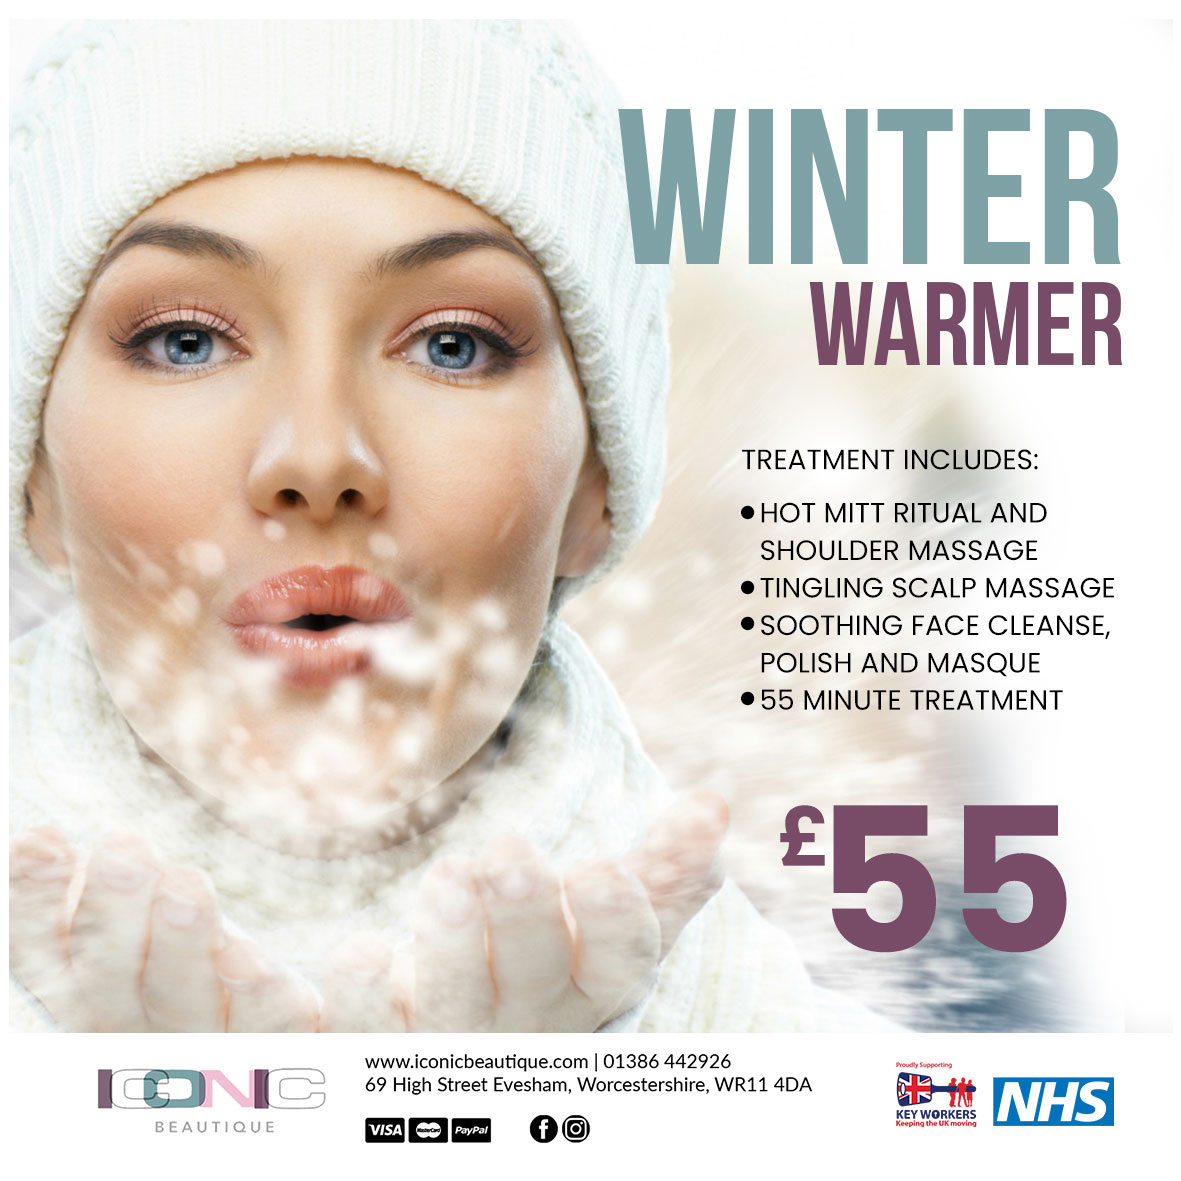 Winter warmer package image